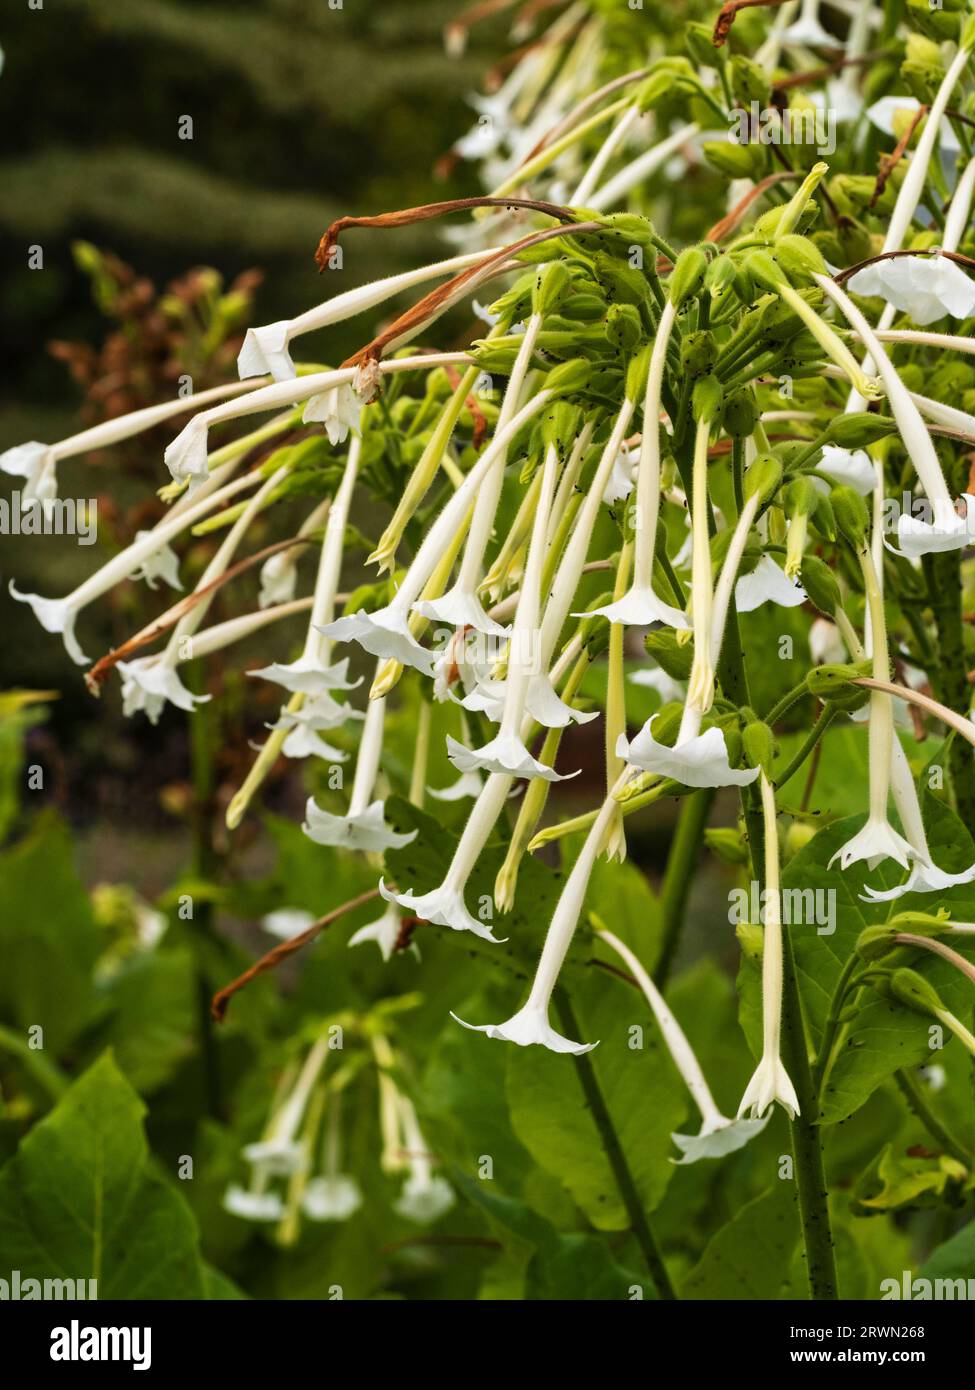 Tubular white fragrant flowers of the tender annual to biennial woodland tobacco plant, Nicotiana sylvestris, Stock Photo